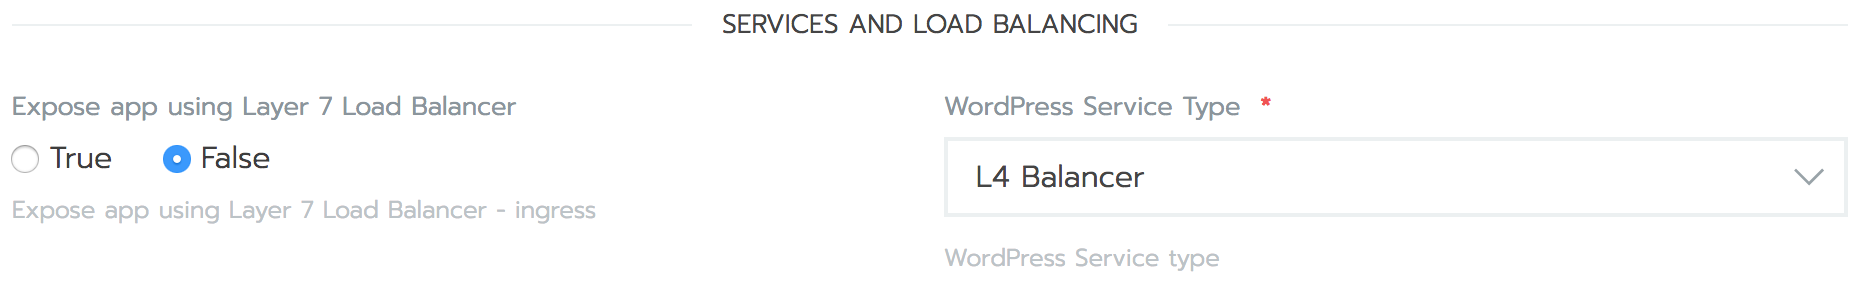 Rancher WordPress setup form - Services and Load Balancing Settings